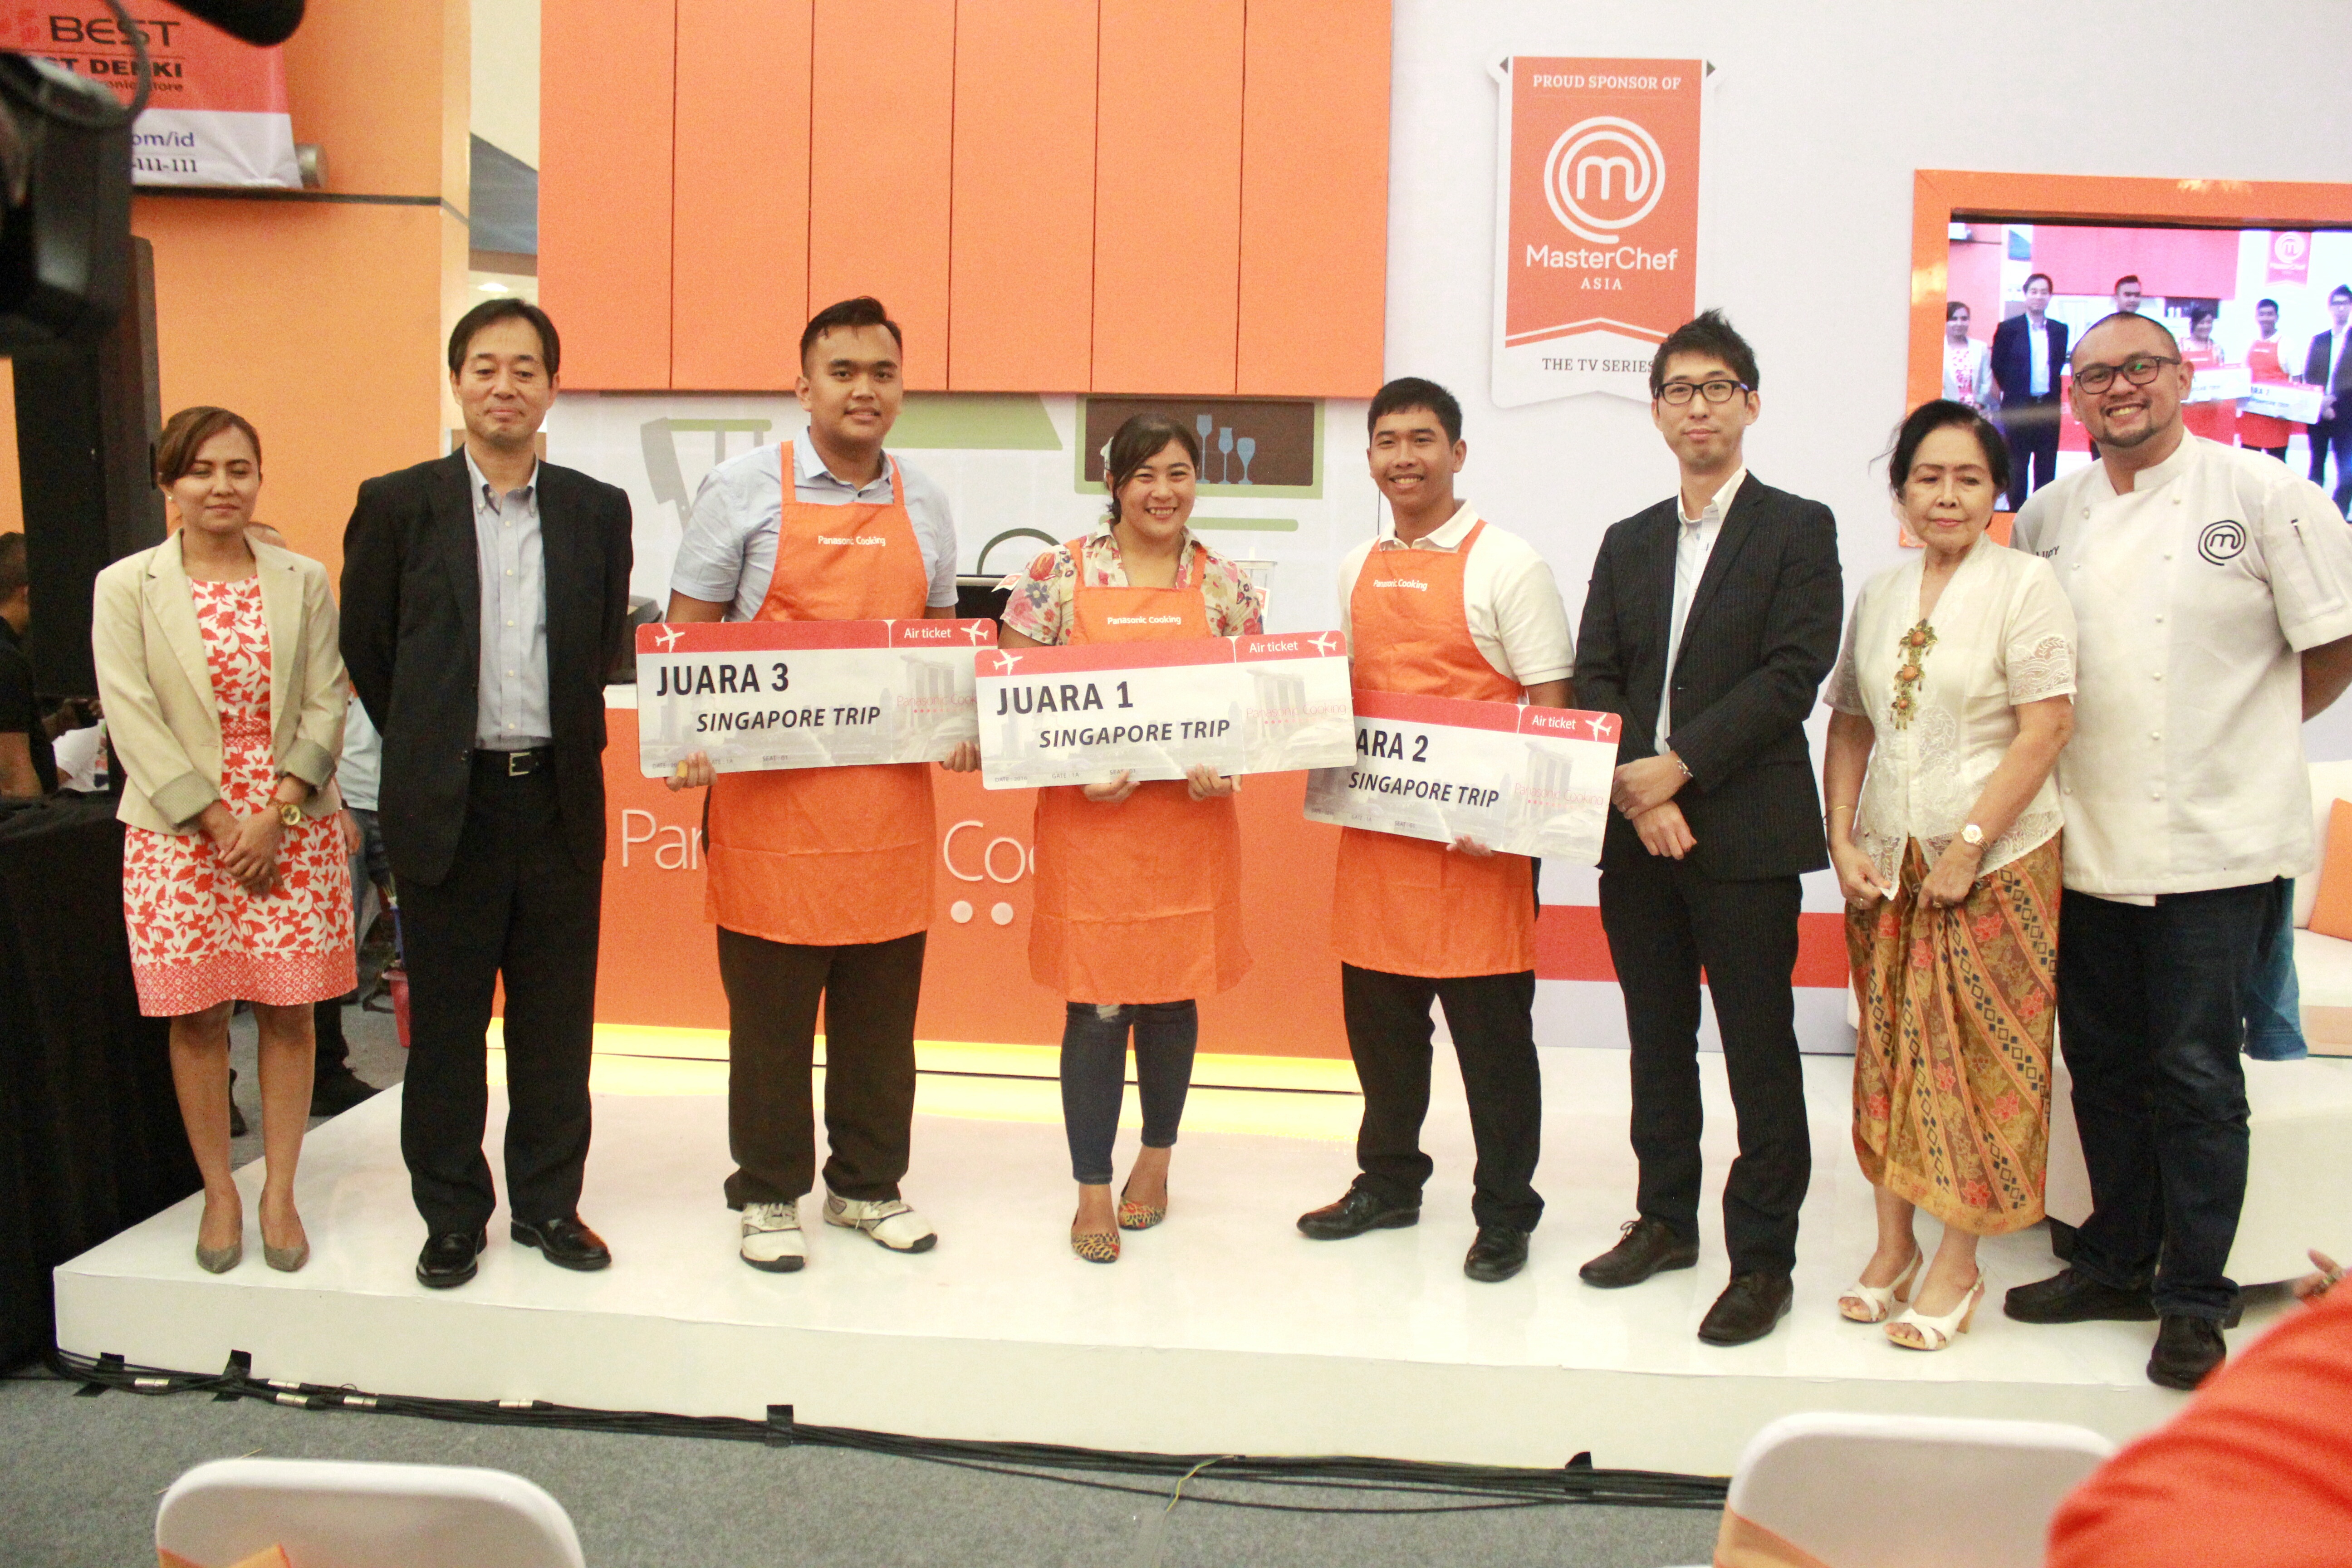 Winners of Panasonic Cooking Competition by Myfunfoodiary